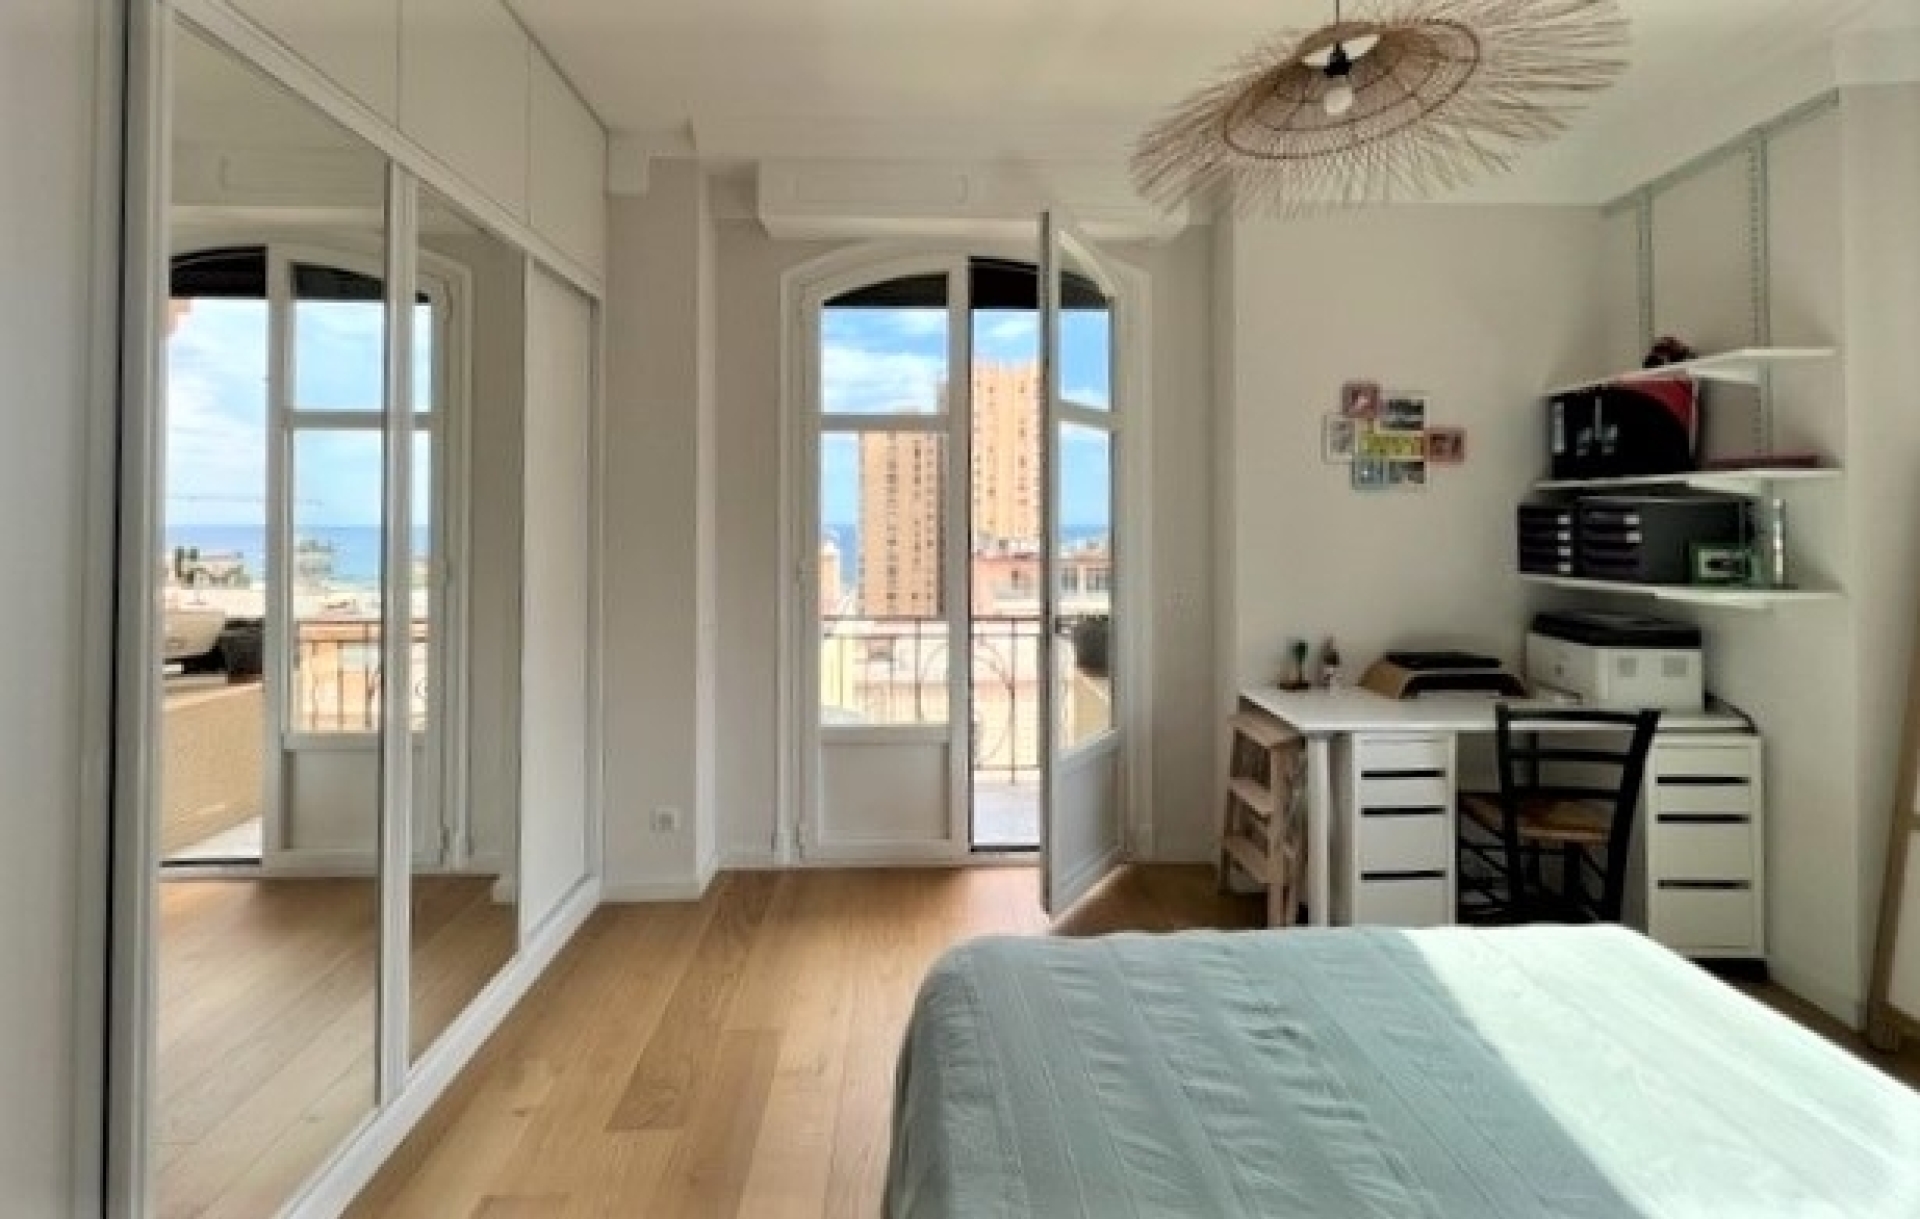 Dotta Appartement de 4 pieces a vendre - PALAIS MIRAMARE - Monte-Carlo - Monaco - img10